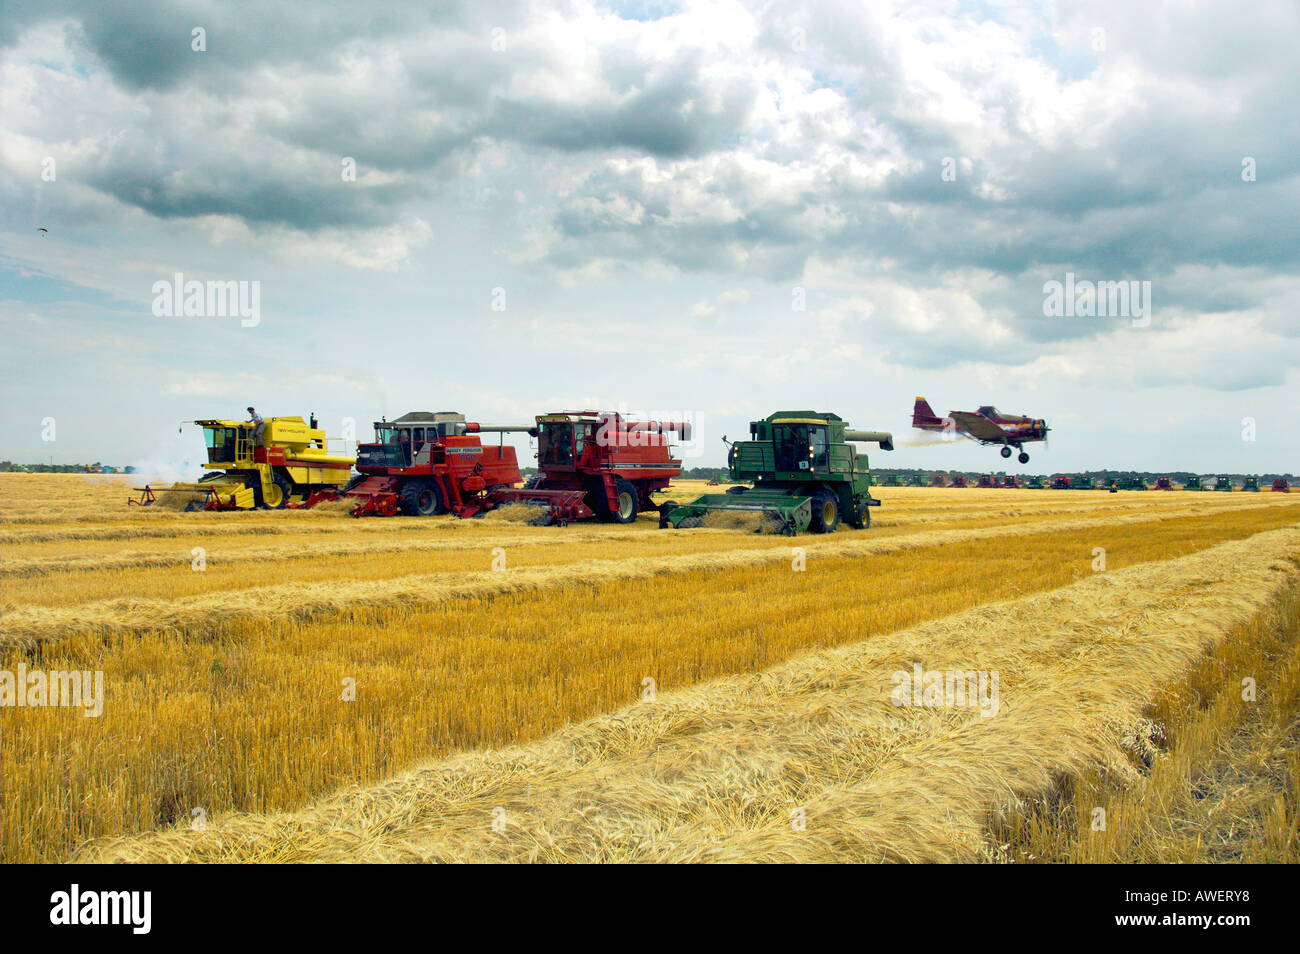 Multiple grain harvesting combines at the World Harvest for Kids event in Winkler Manitoba Canada Stock Photo